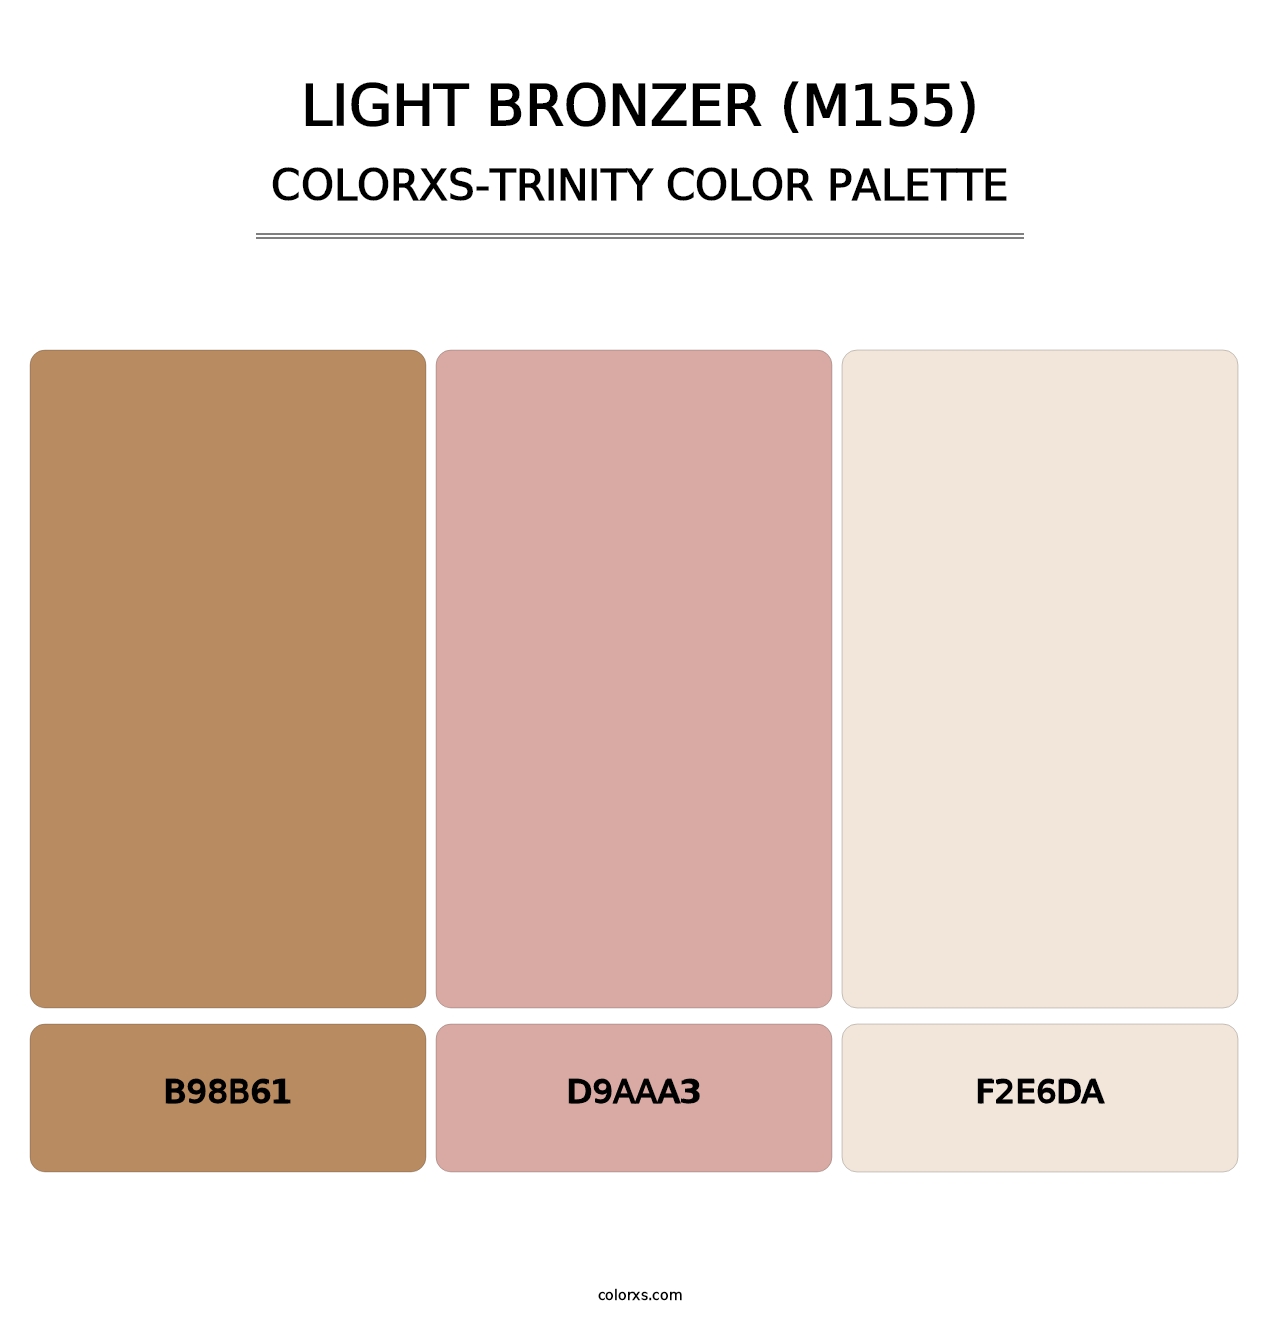 Light Bronzer (M155) - Colorxs Trinity Palette